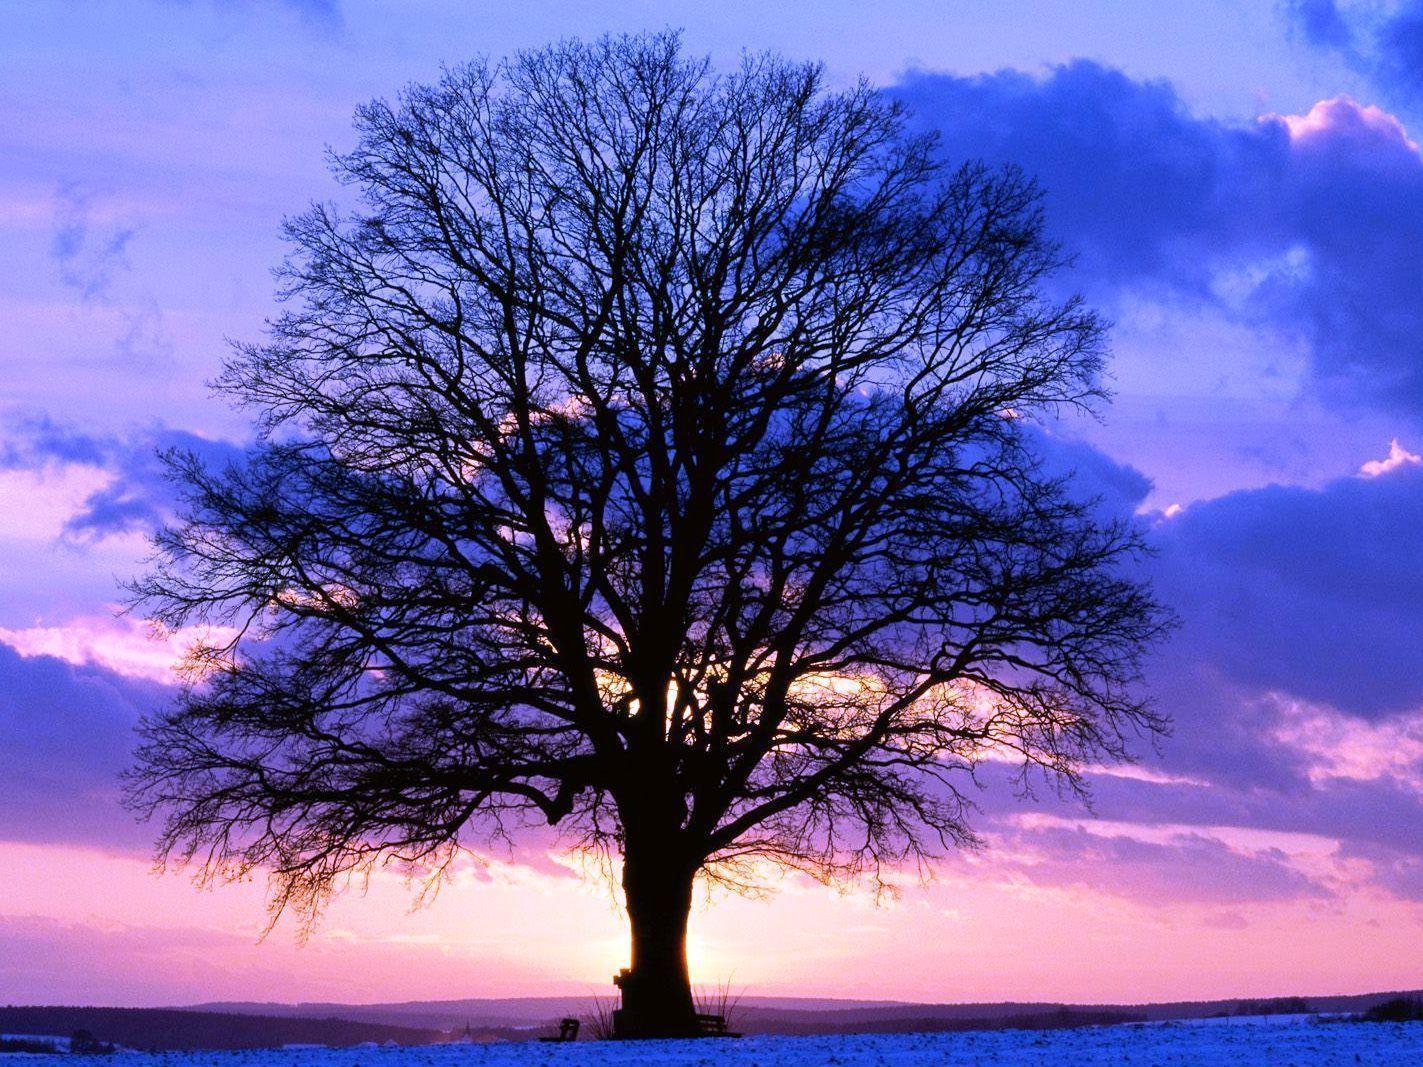 Alone tree at sunset free desktop background wallpaper image